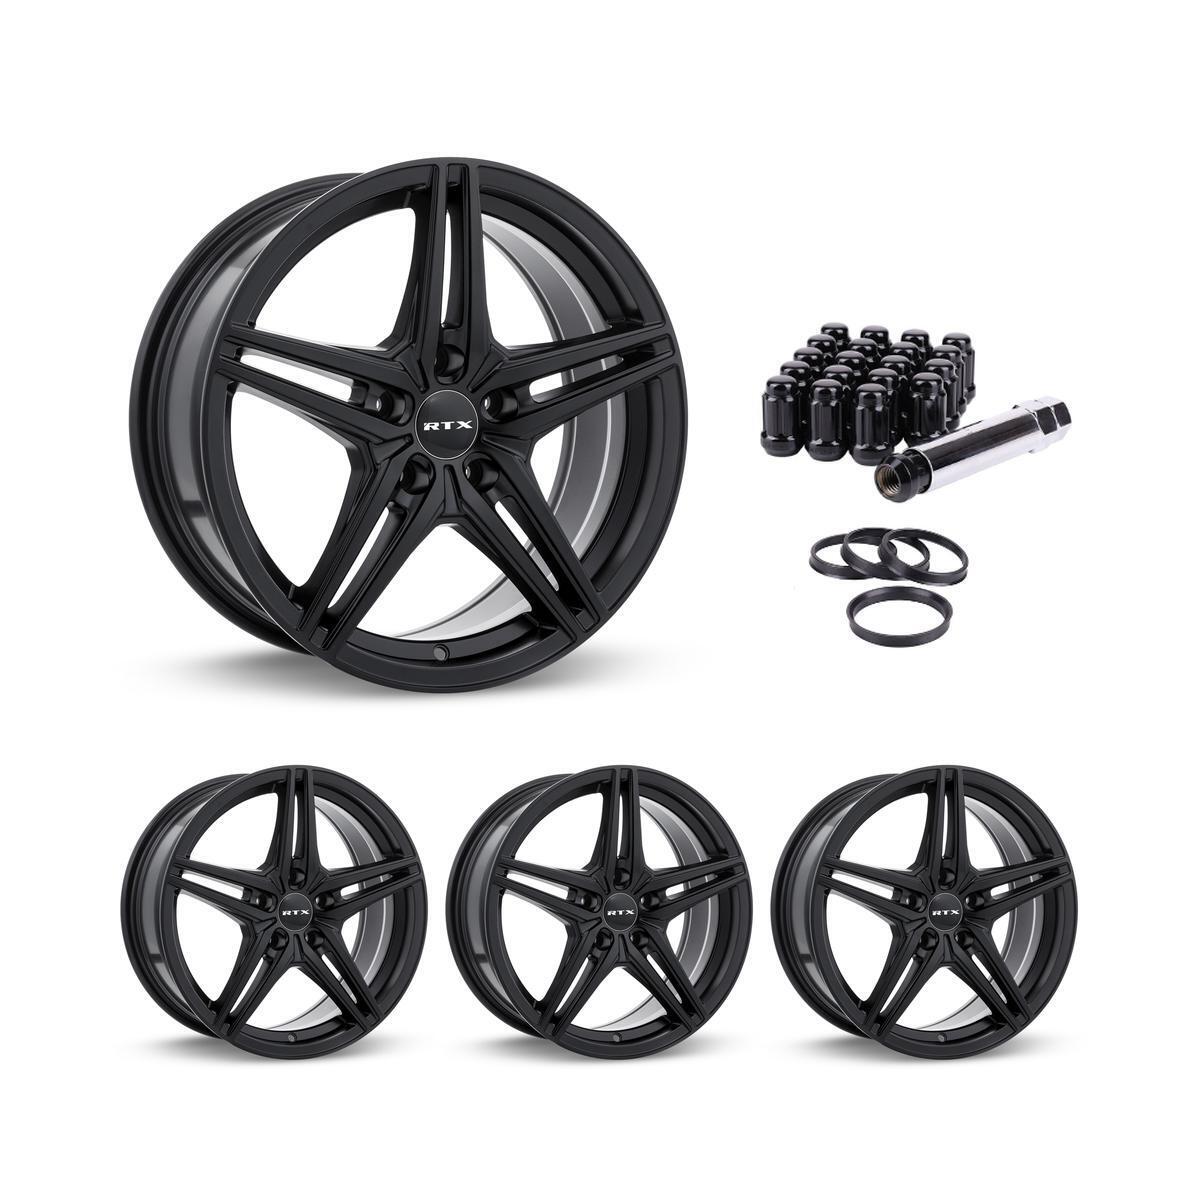 Wheel Rims Set with Black Lug Nuts Kit for 01 Hyundai XG300 P845721 15 inch